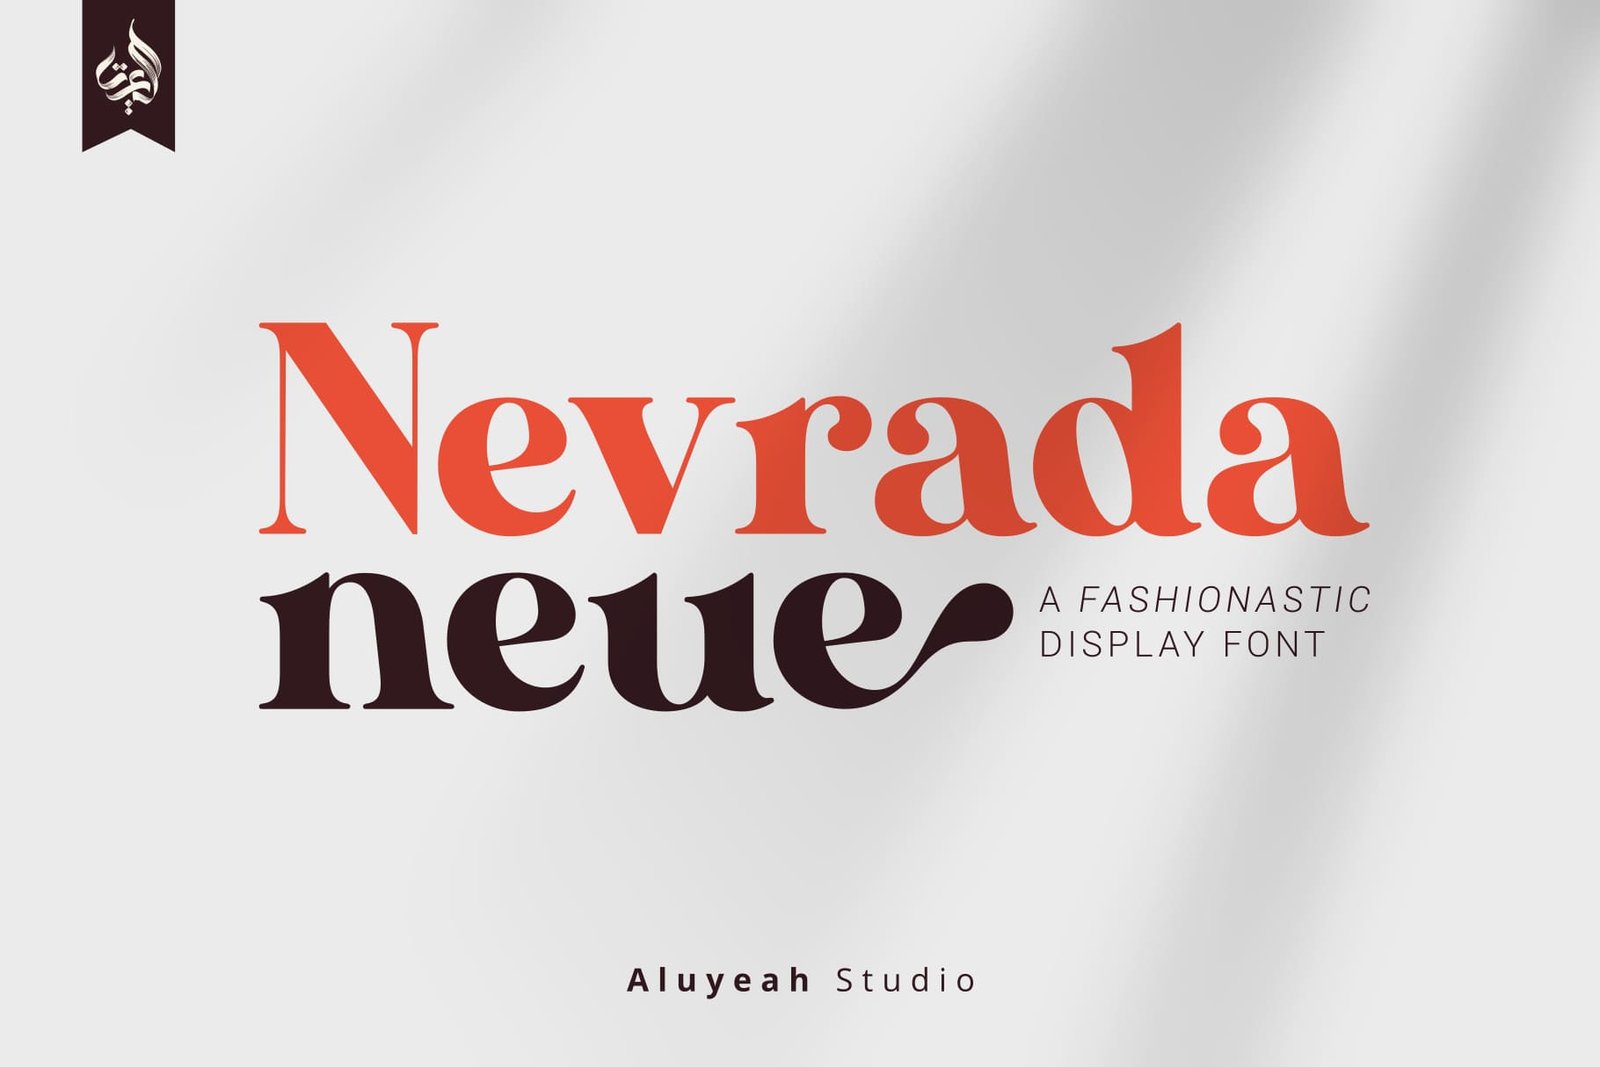 Nevrada Neue a Fashiontastic Display Font